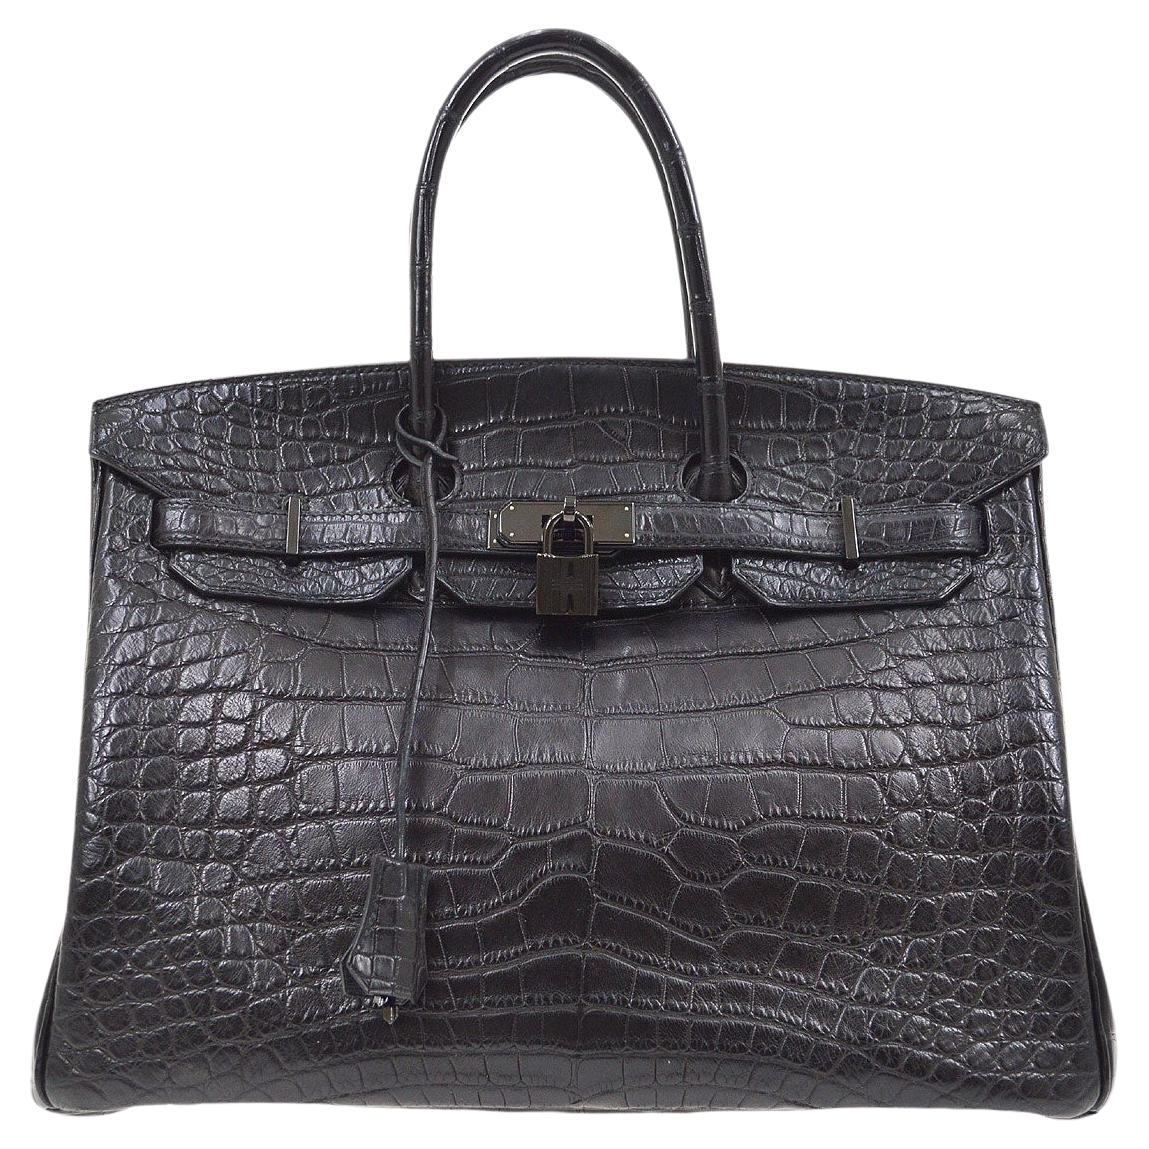 HERMES Birkin 35 Black Matt Crocodile Alligator Leather Top Handle Tote Bag